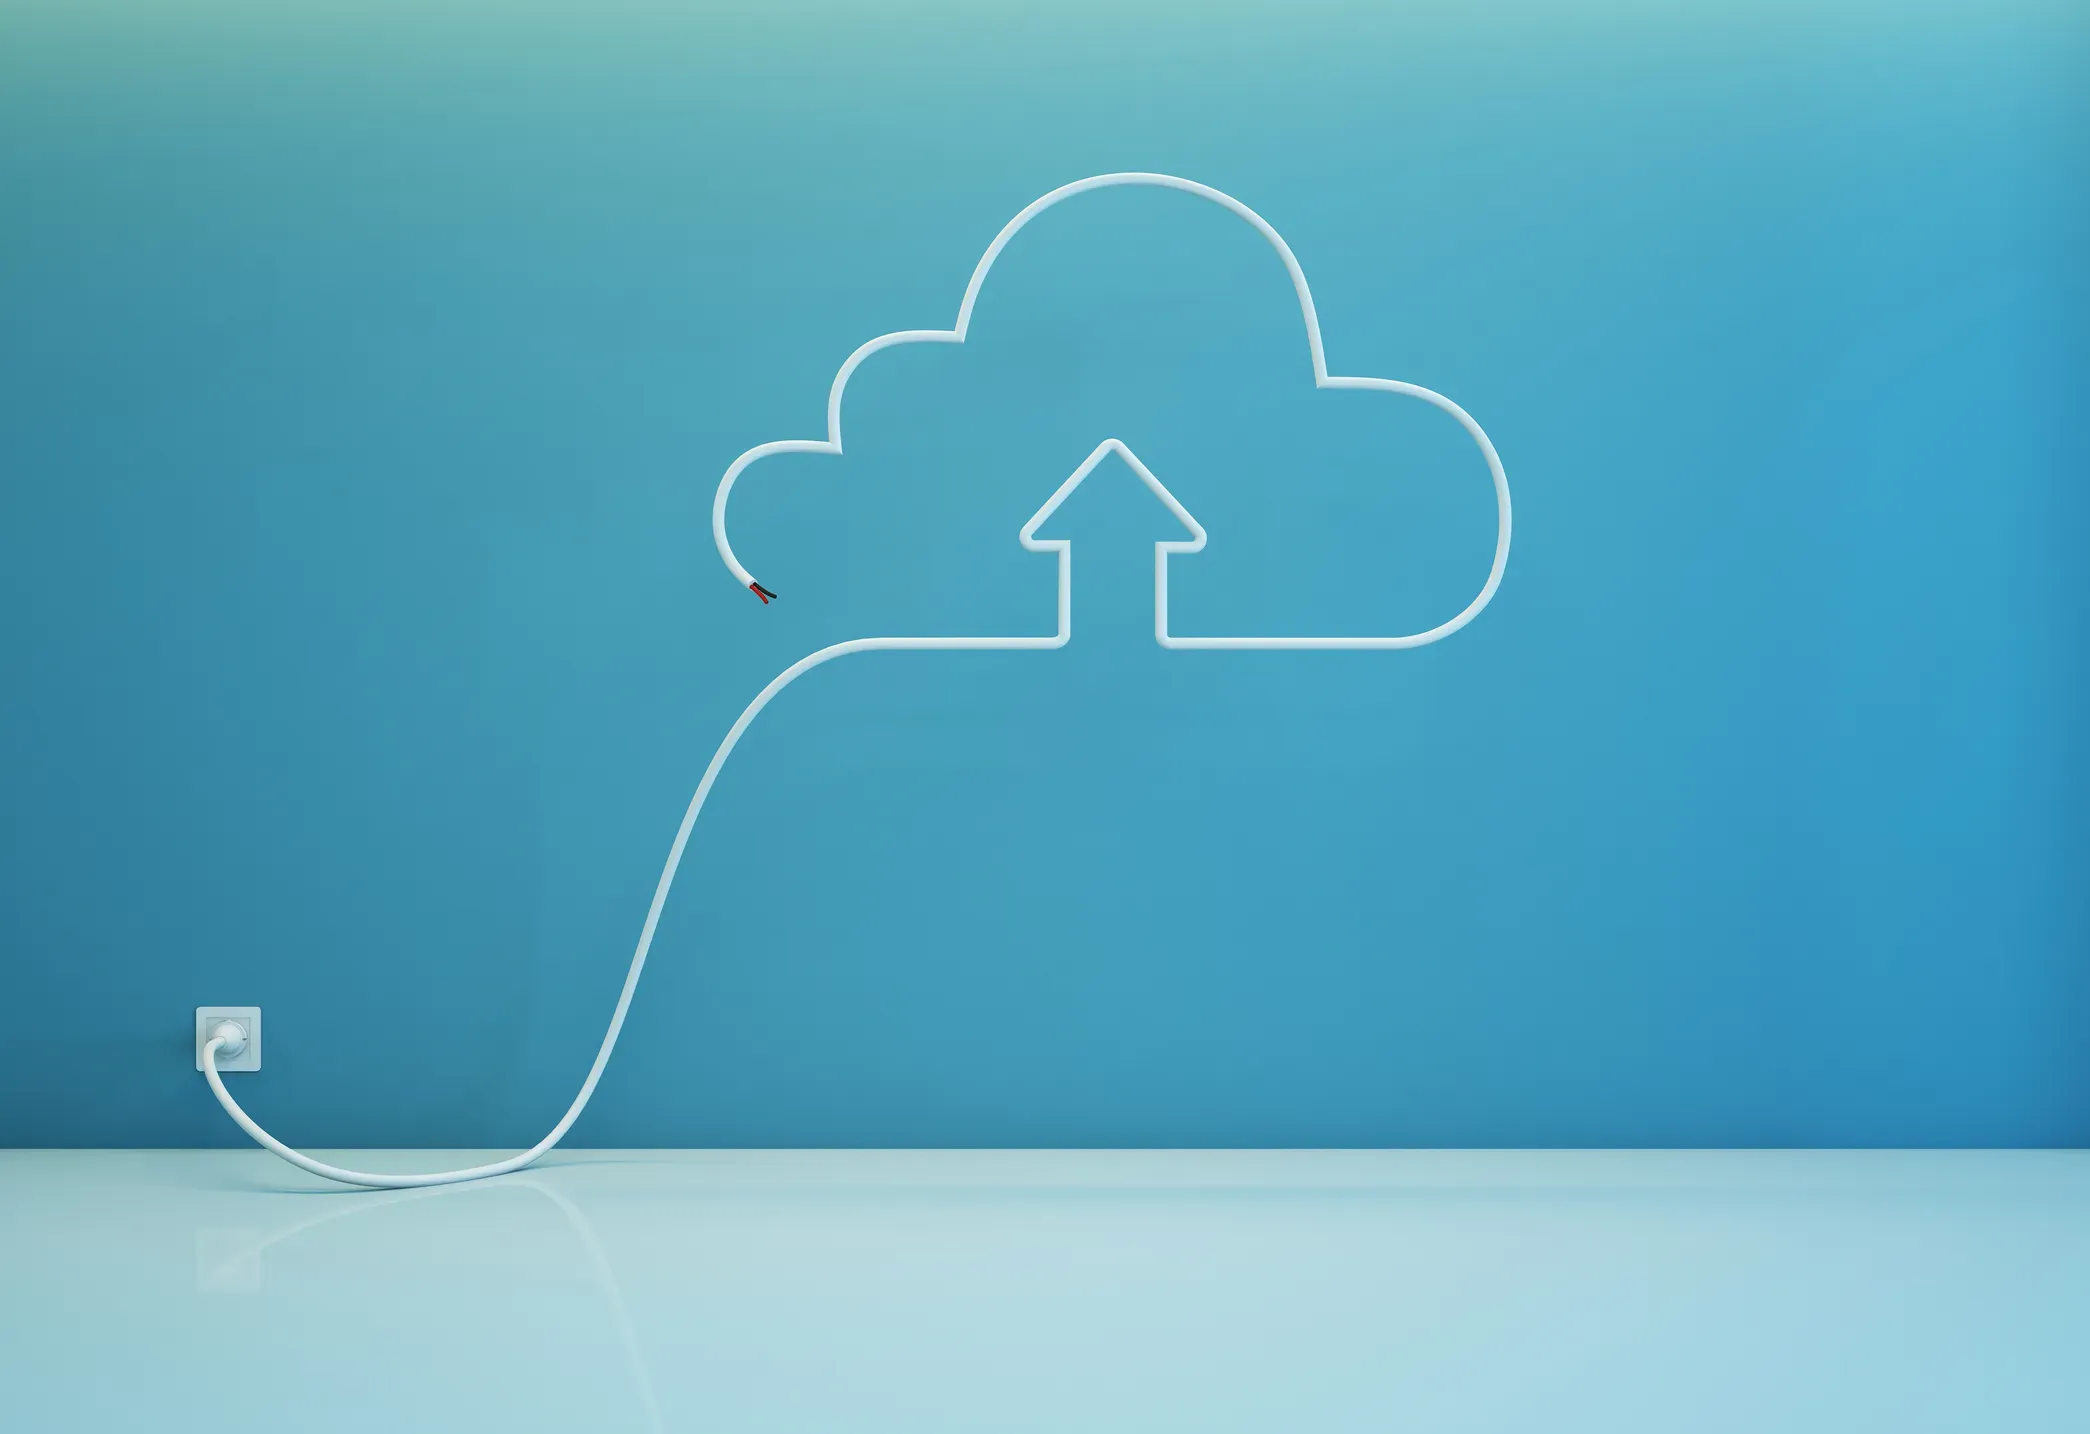 Big Data Service Providers Ride the Cloud Computing Wave